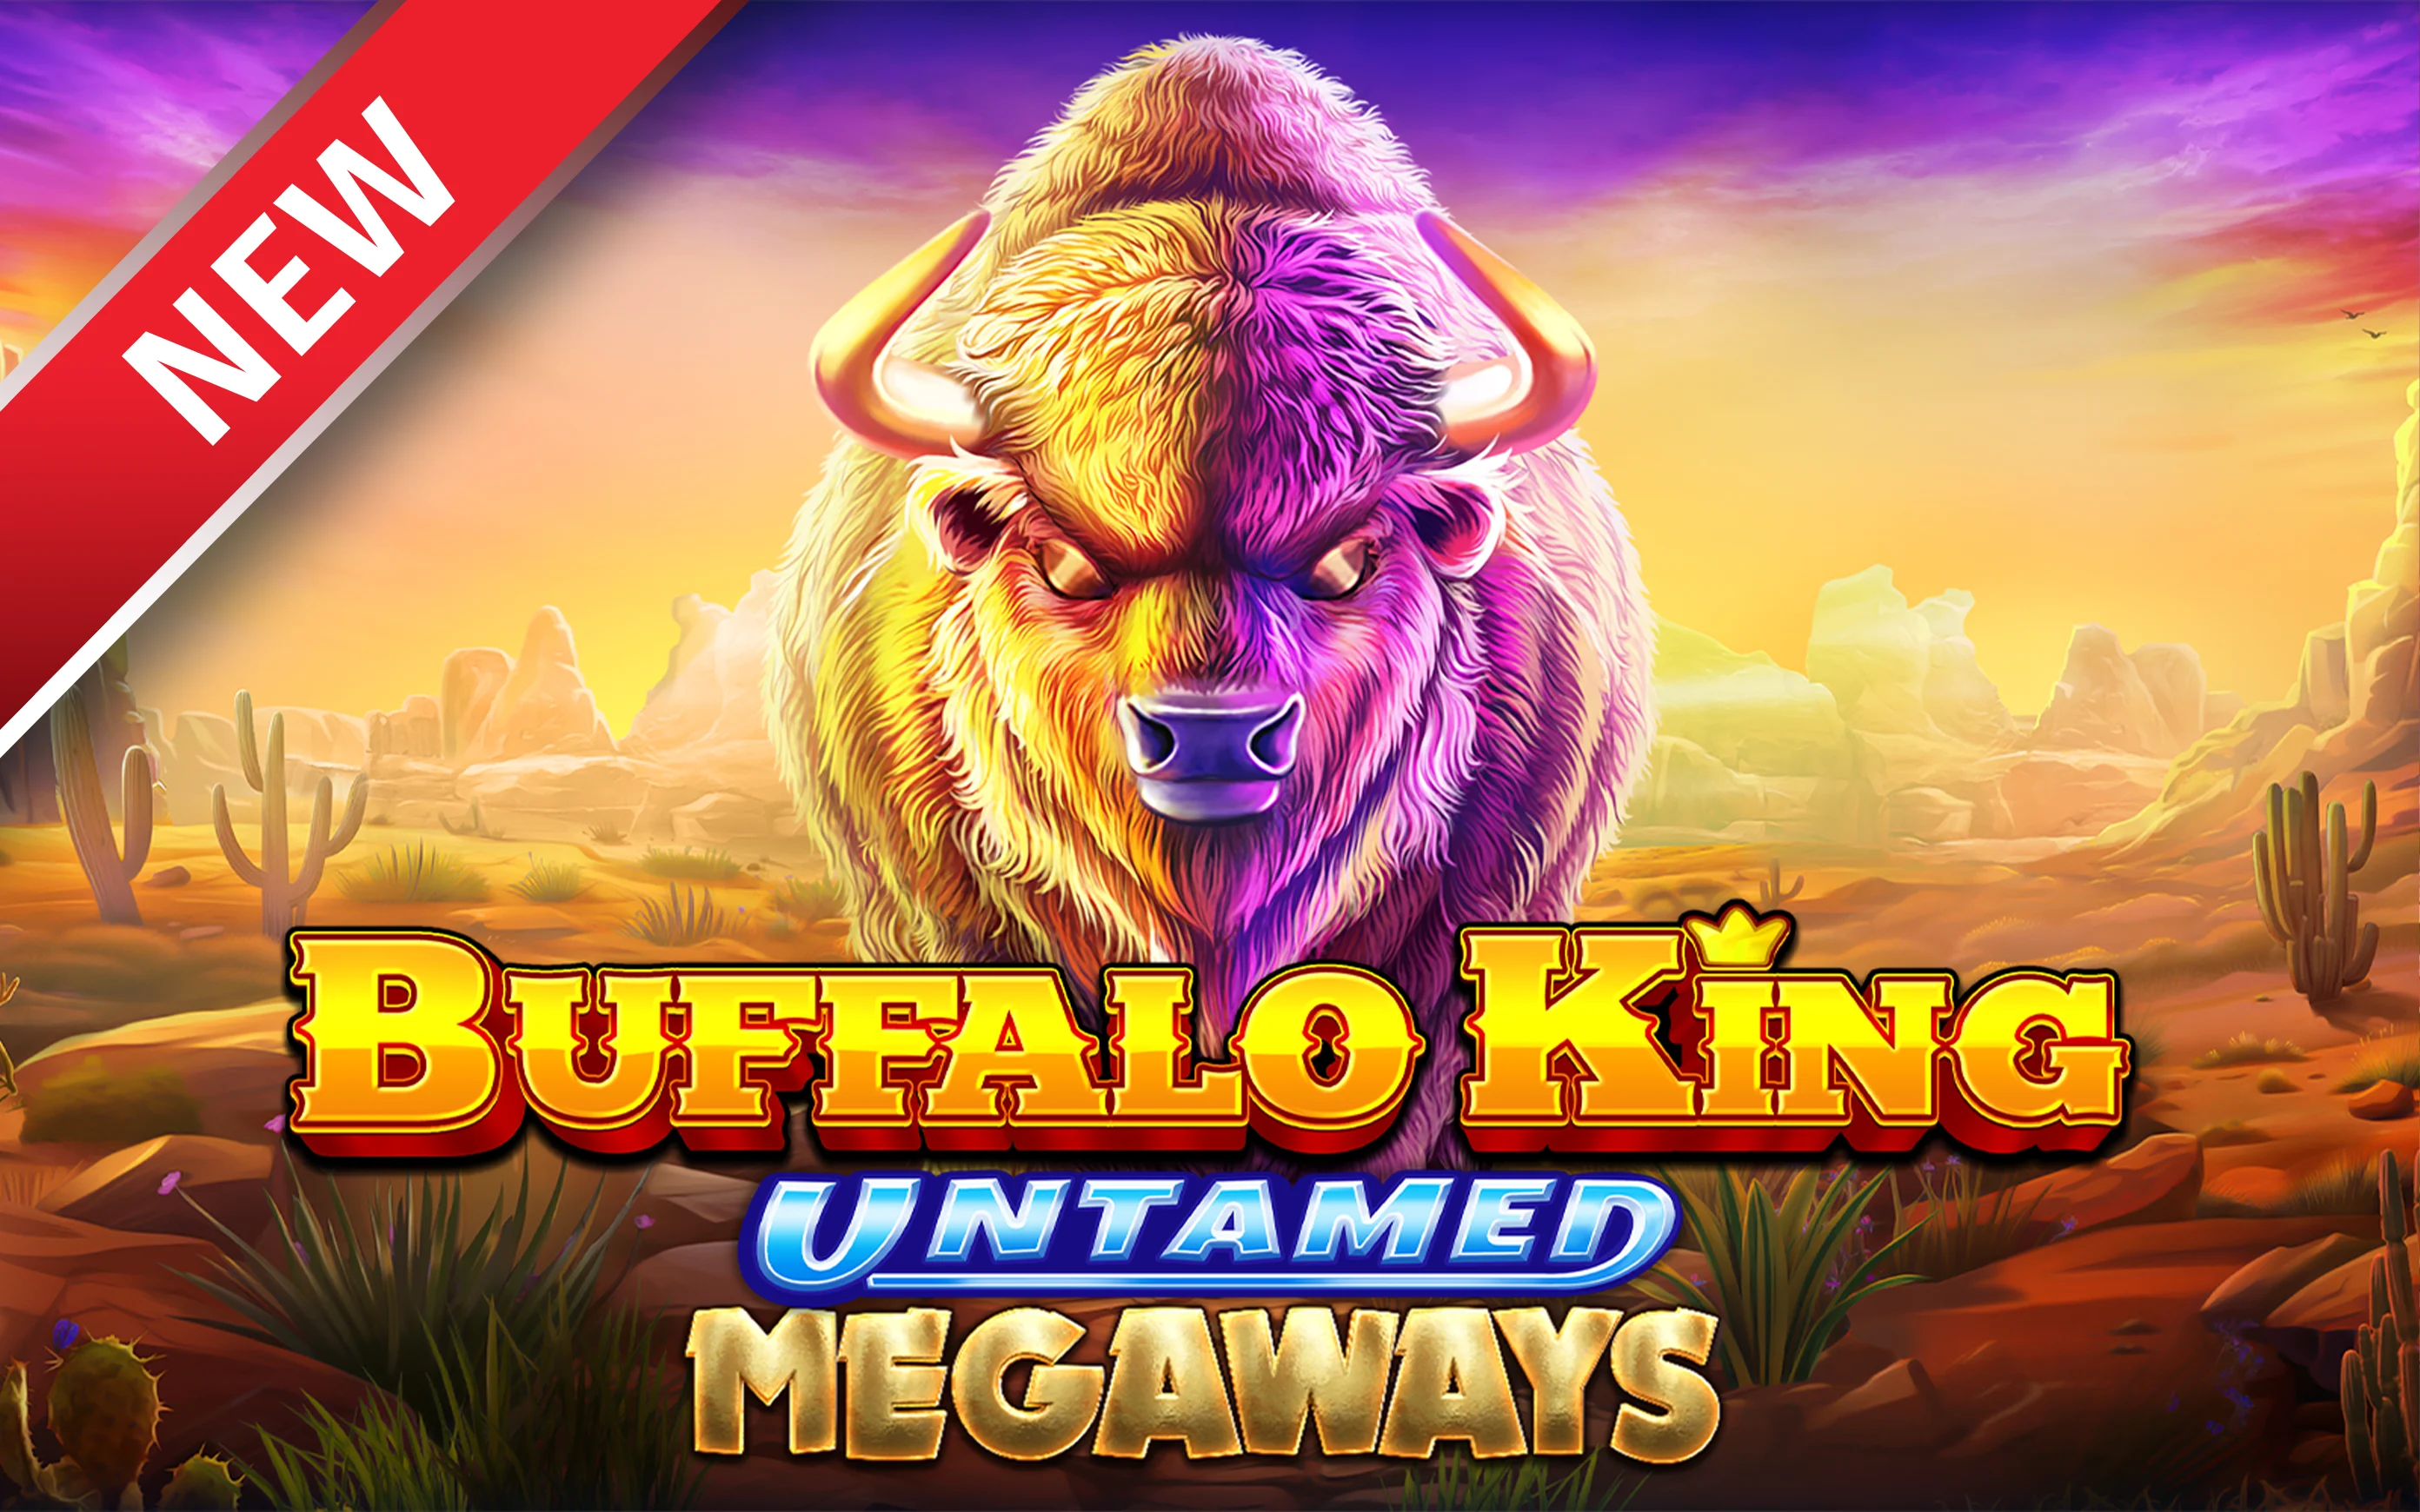 Gioca a Buffalo King Untamed Megaways™ sul casino online Starcasino.be